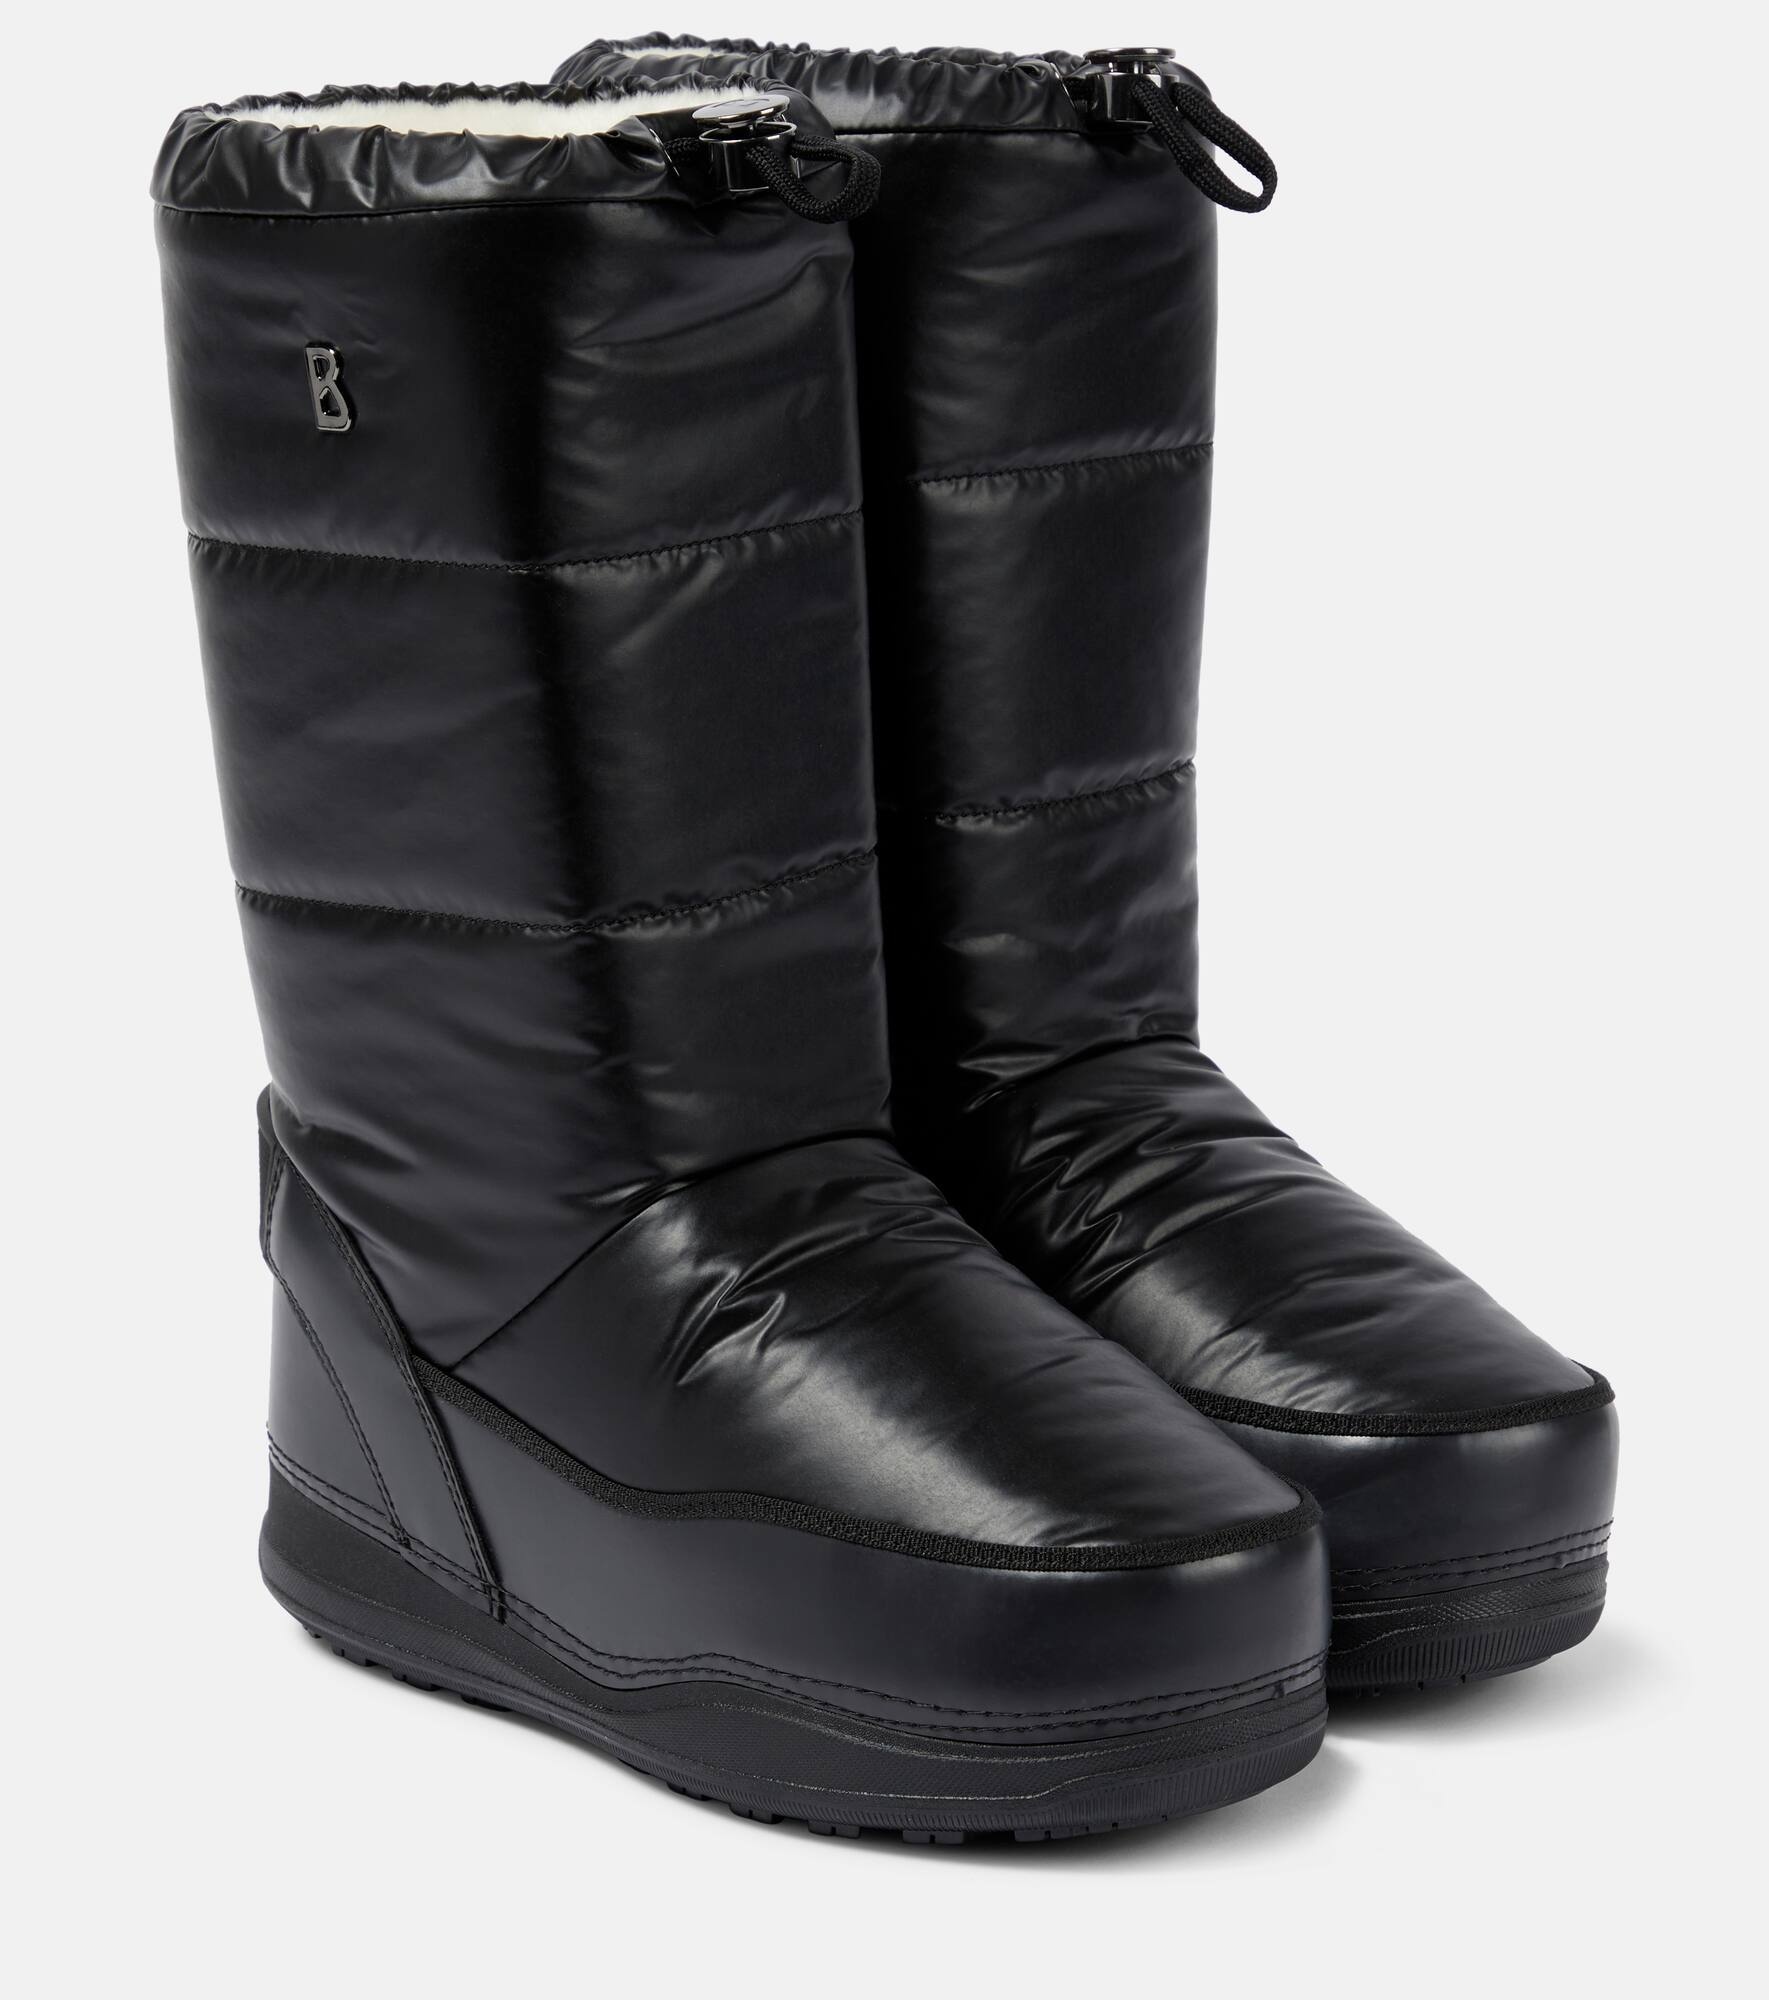 x Michelin Les Arcs snow boots - 1